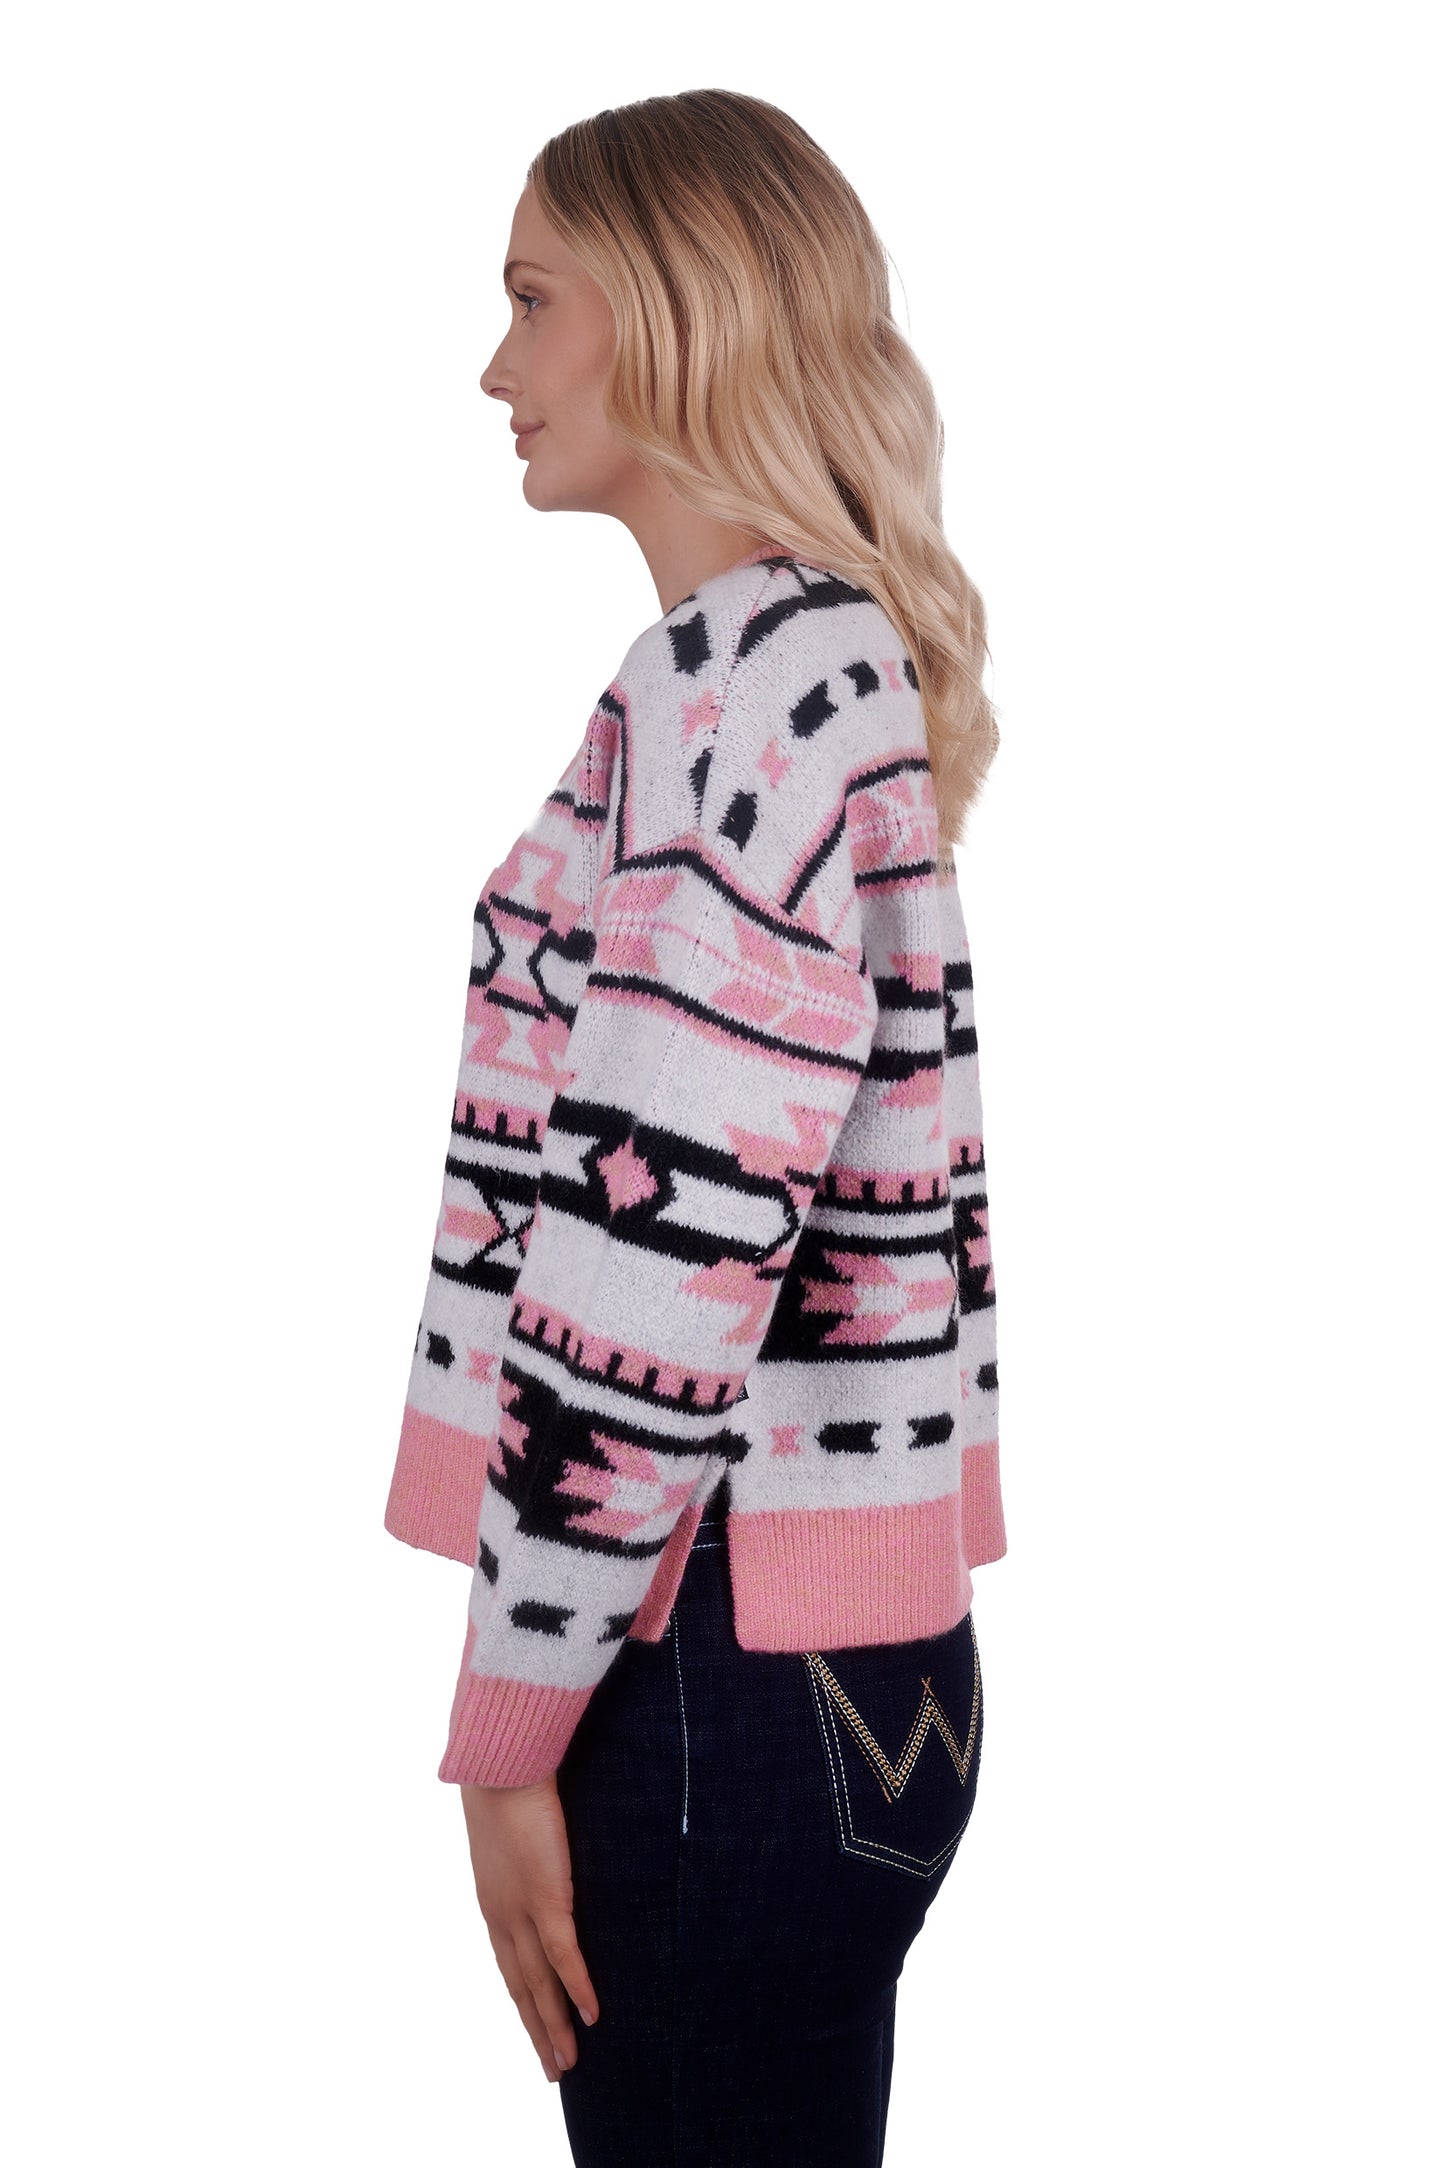 Wrangler Womens Gigi Knitted Pullover - Pink - X4W2517091